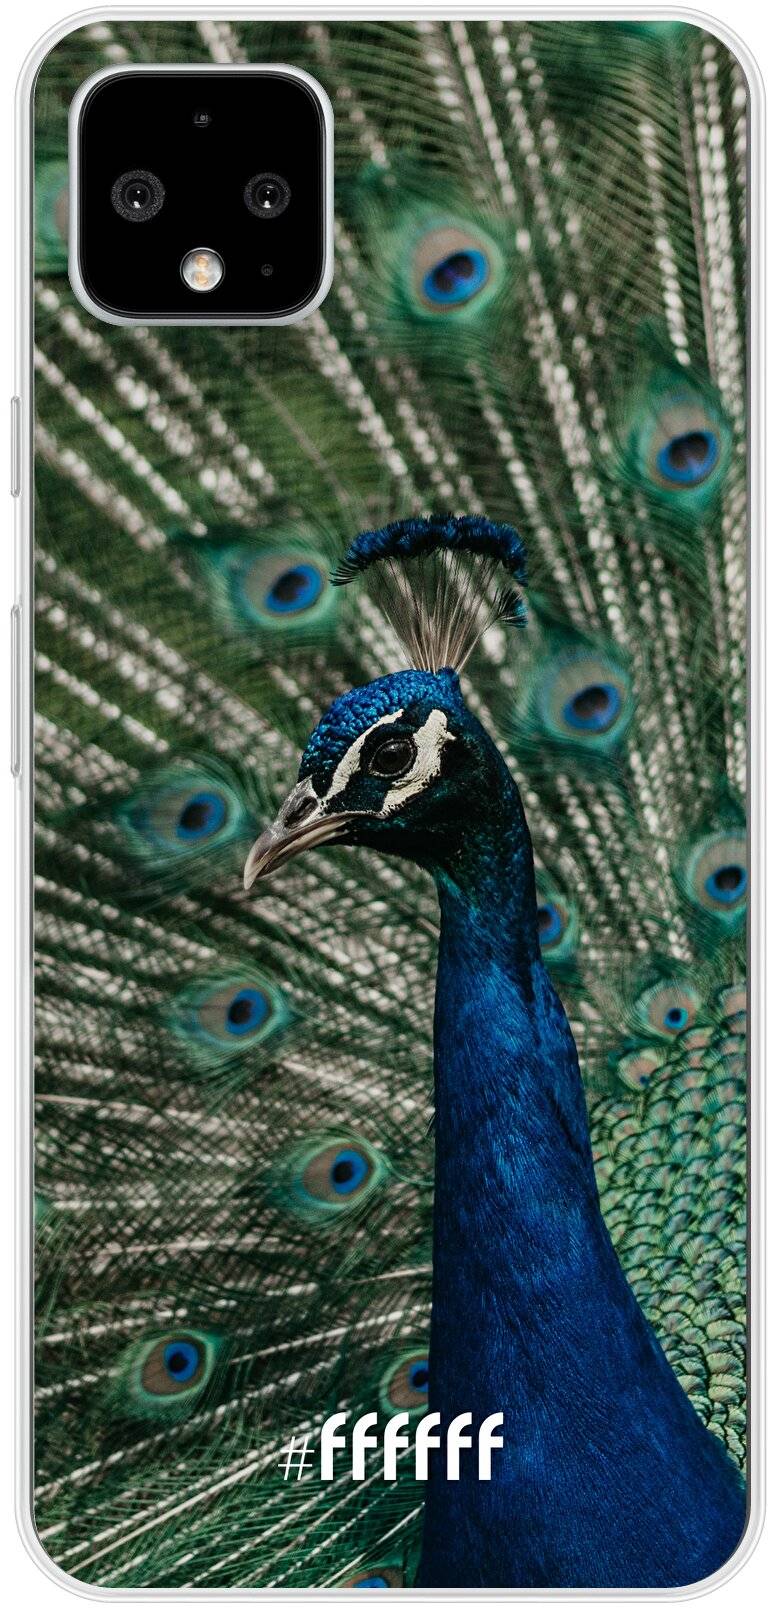 Peacock Pixel 4 XL